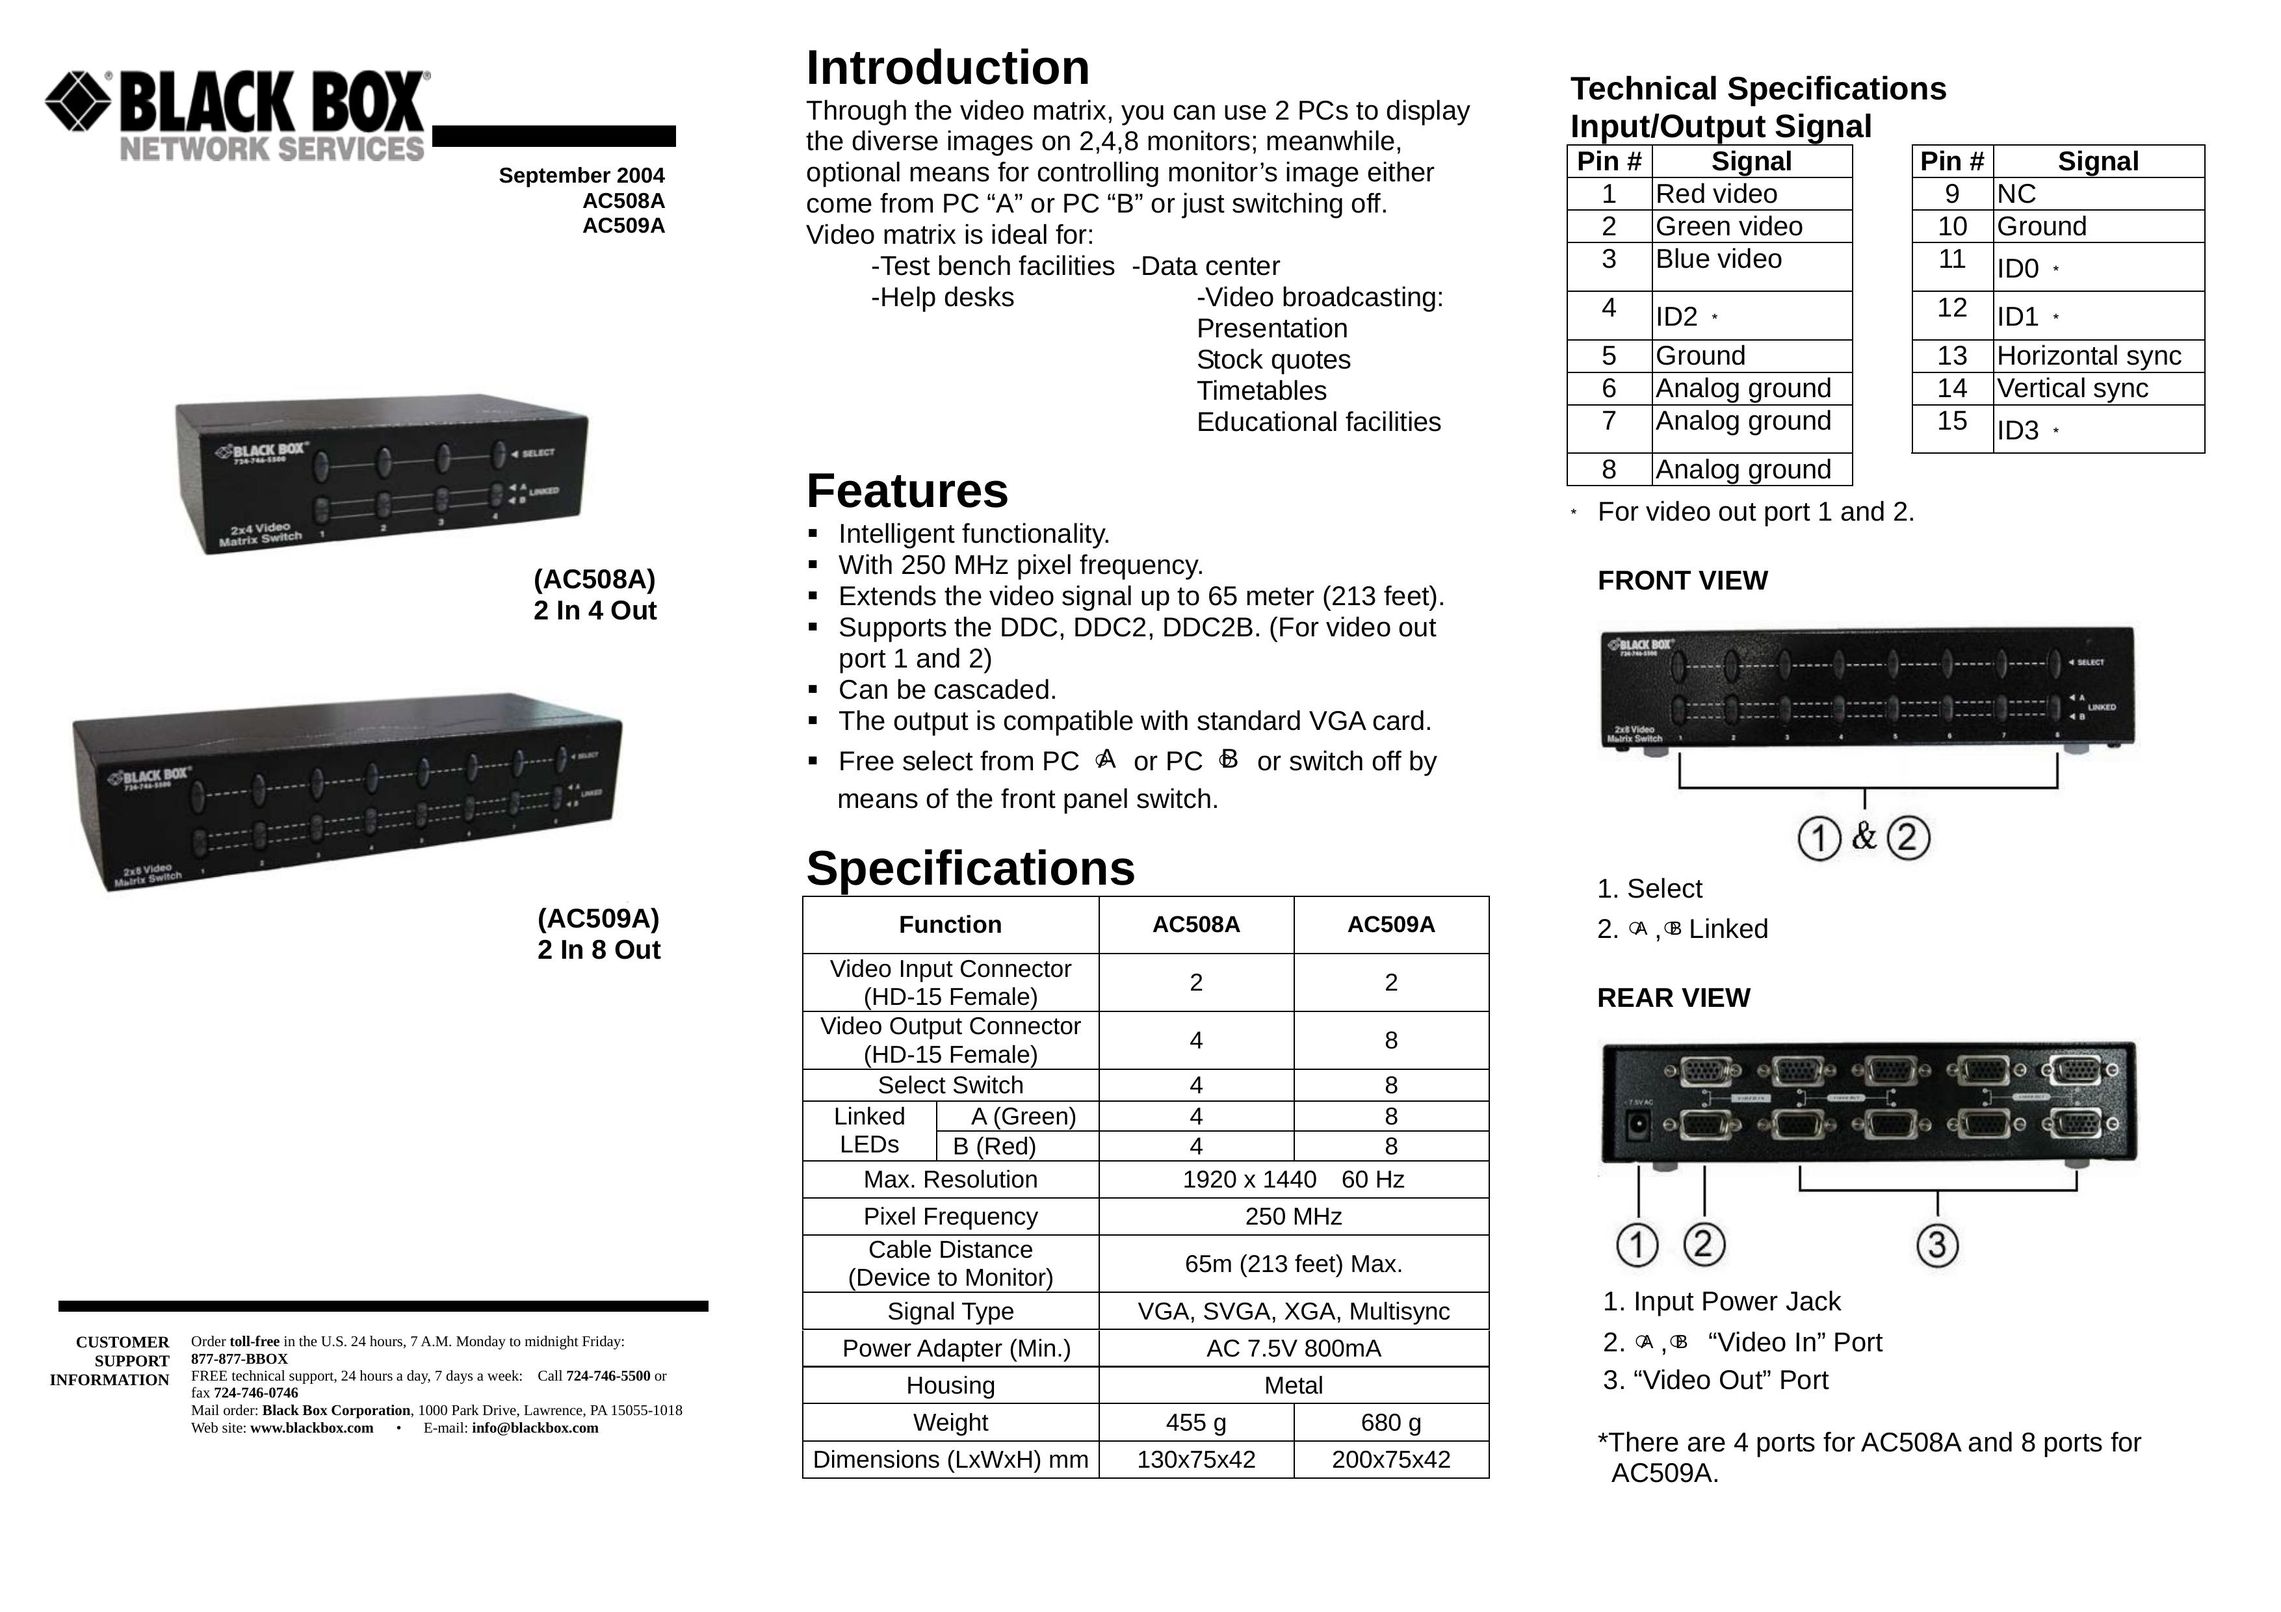 Black Box Black Box Video Matrix Network Router User Manual